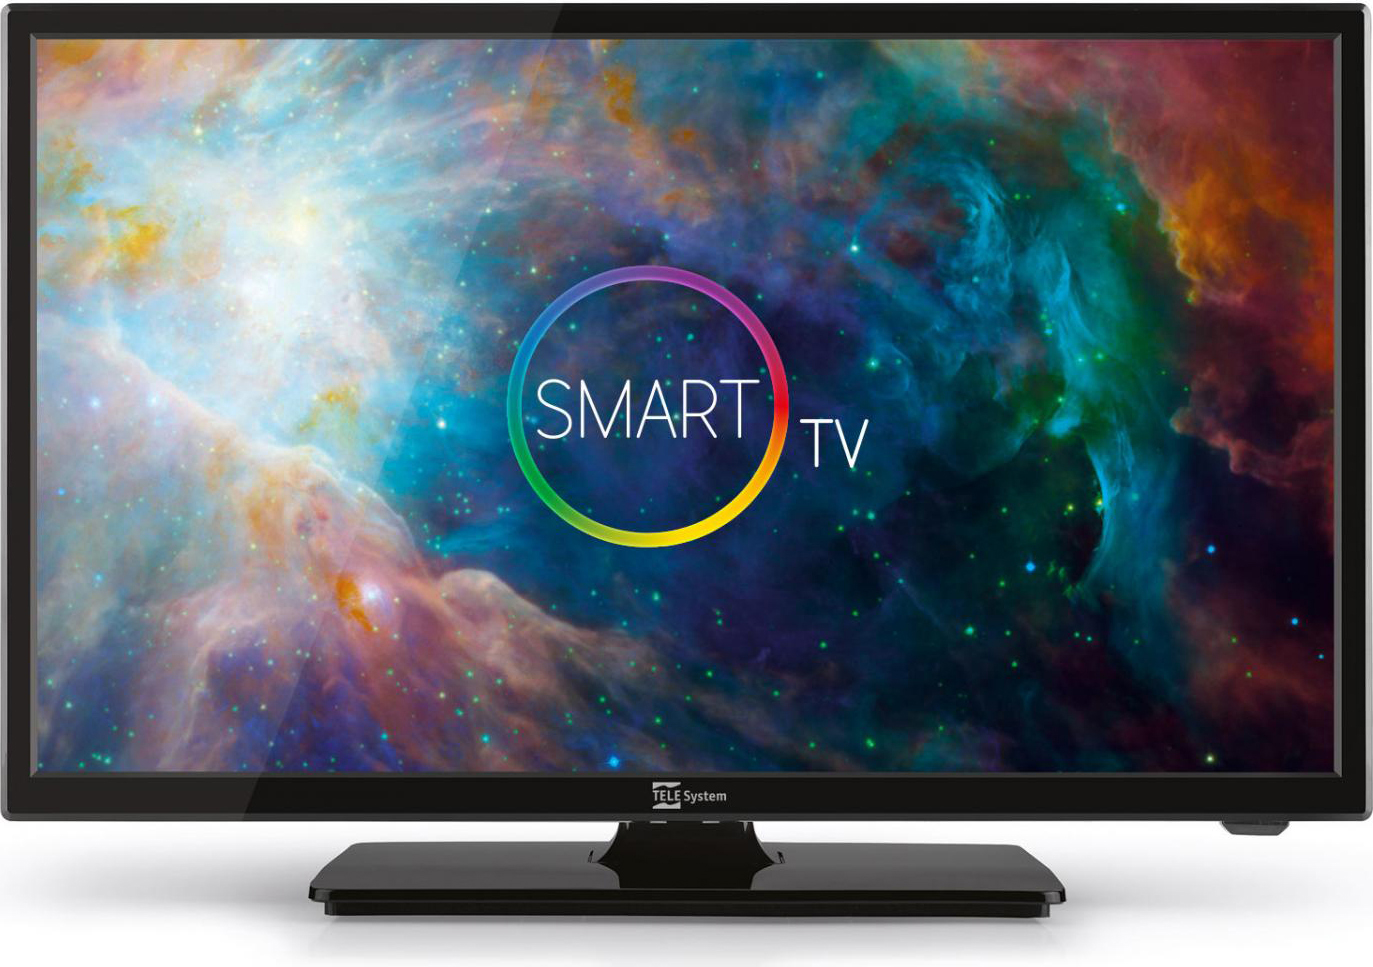 Telesystem Smart TV LED 23.6 Pollici HD Android TV HDMI USB Sound24 LS09 ITA